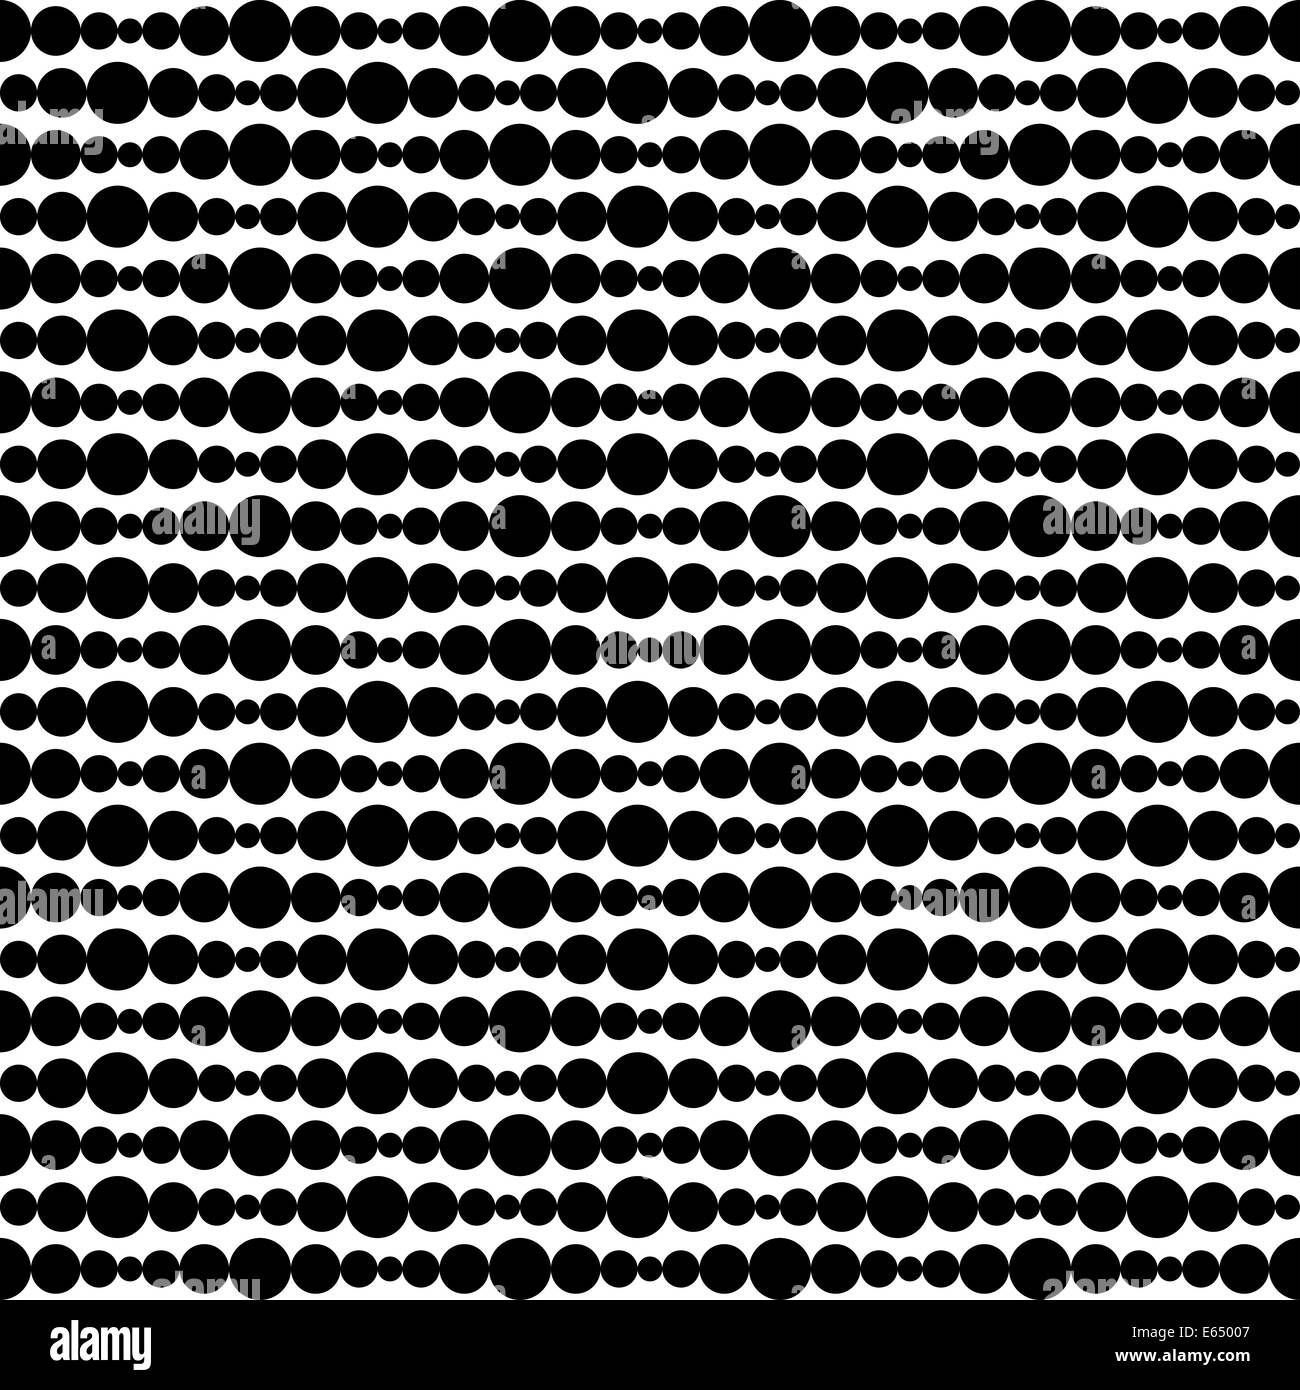 Retro Muster Punkte Kreise Retromuster schwarz weiß art Illustration modèle abstrakt artwort Illustrationen Vektor Vektorgrafik Banque D'Images